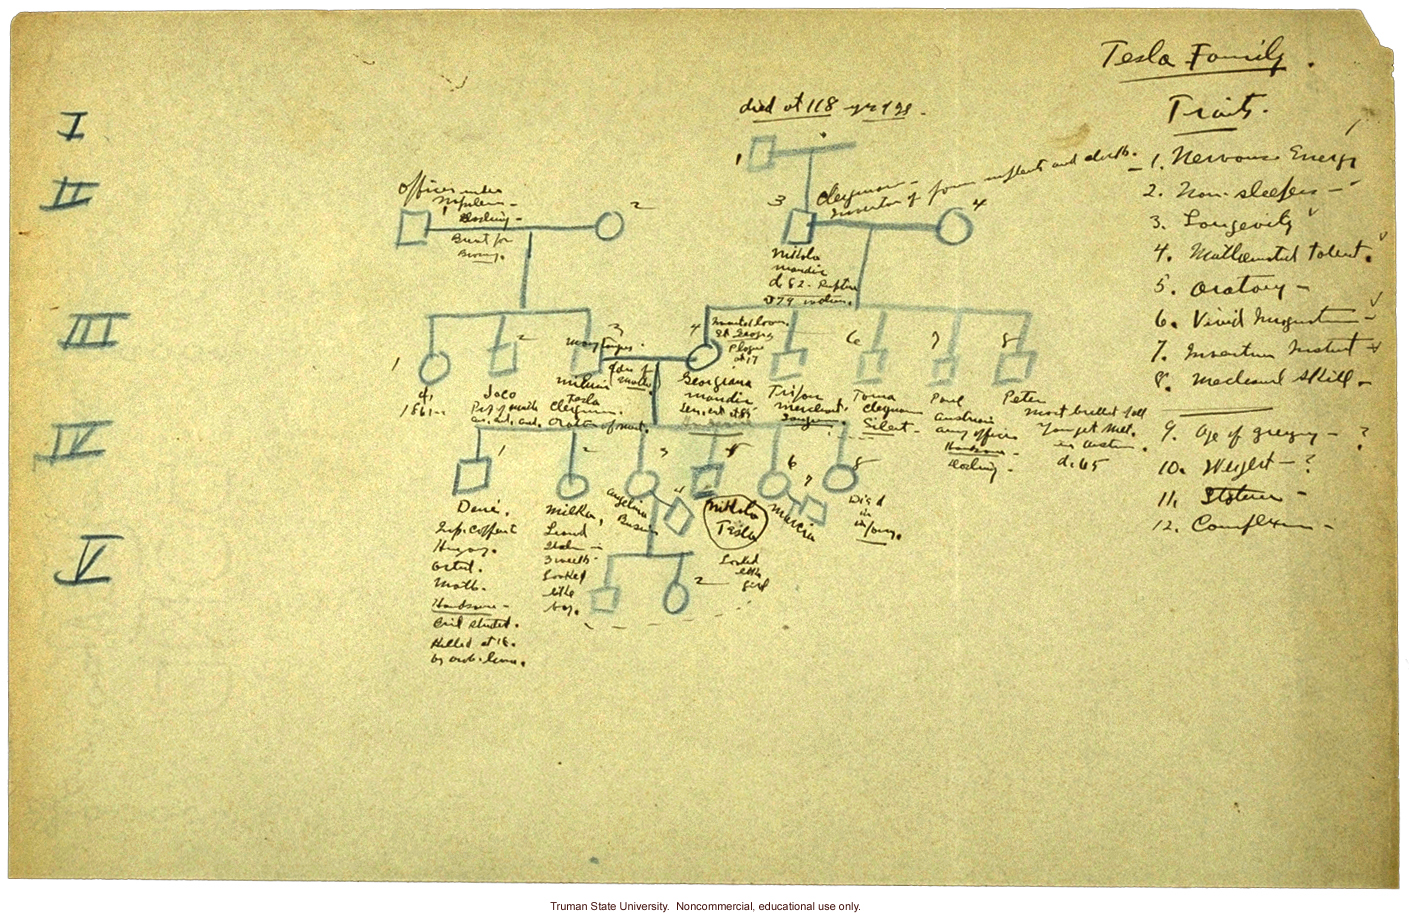 H. Laughlin's hand-written pedigree of the Tesla family